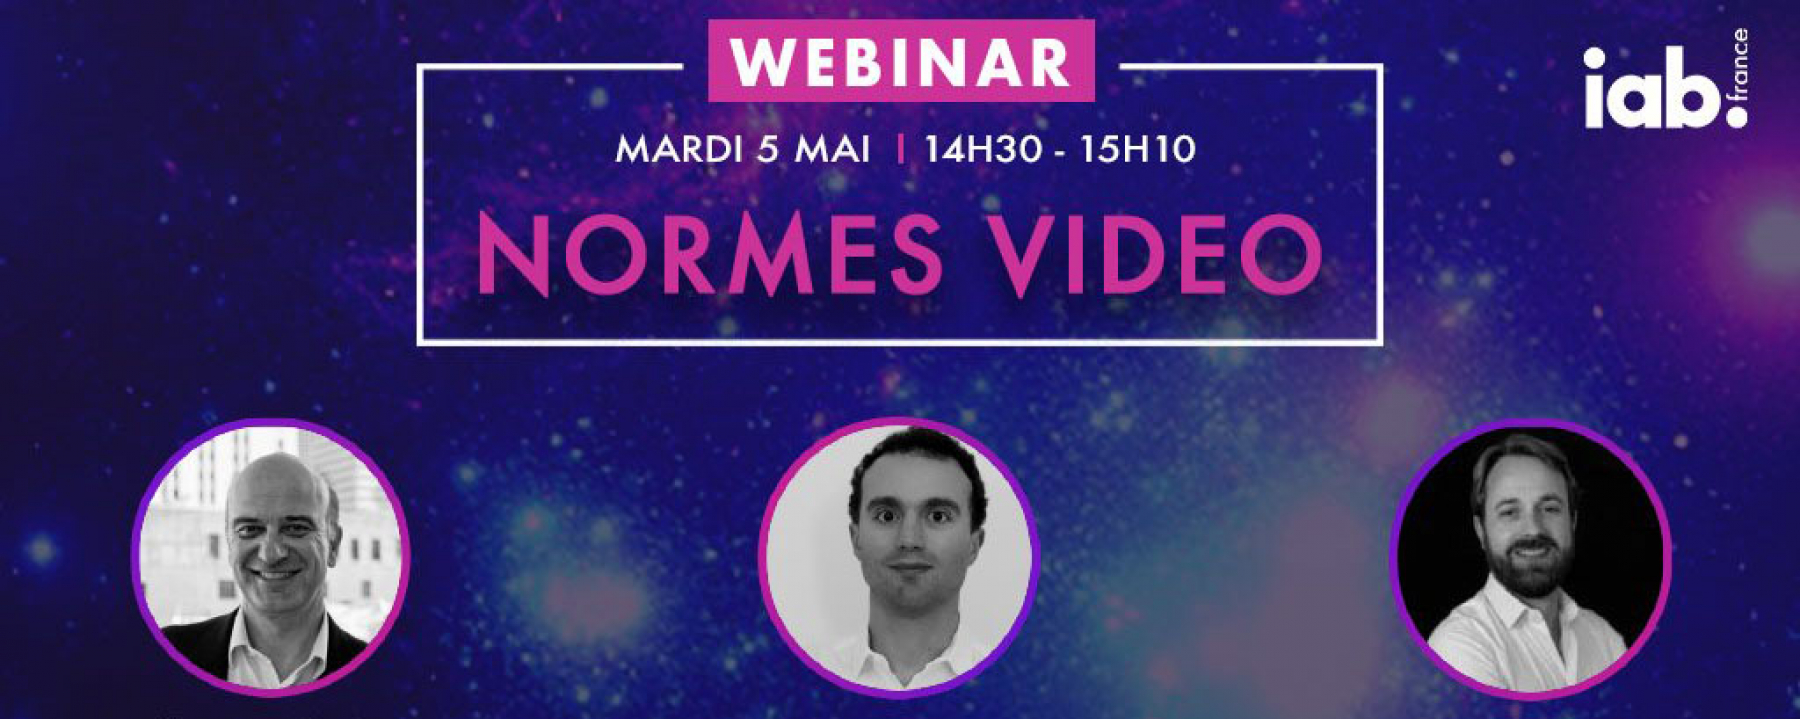 Webinar Normes vidéo, le 5 mai 2020, organisé par IAB France